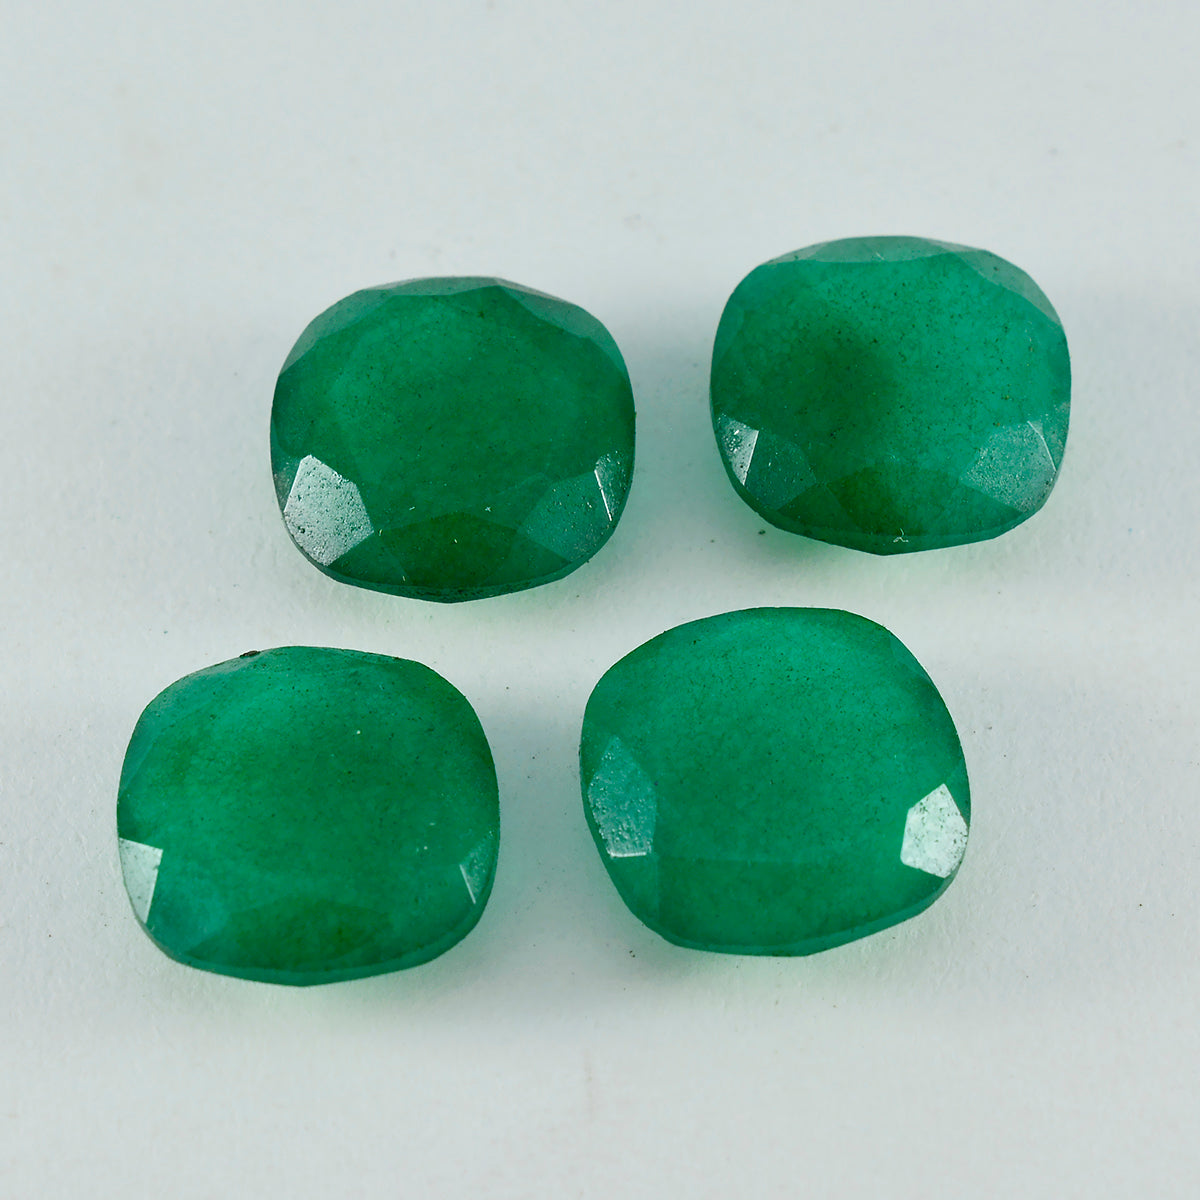 riyogems 1pc リアル グリーン ジャスパー ファセット 12x12 mm クッション形状の見栄えの良い品質のルース宝石